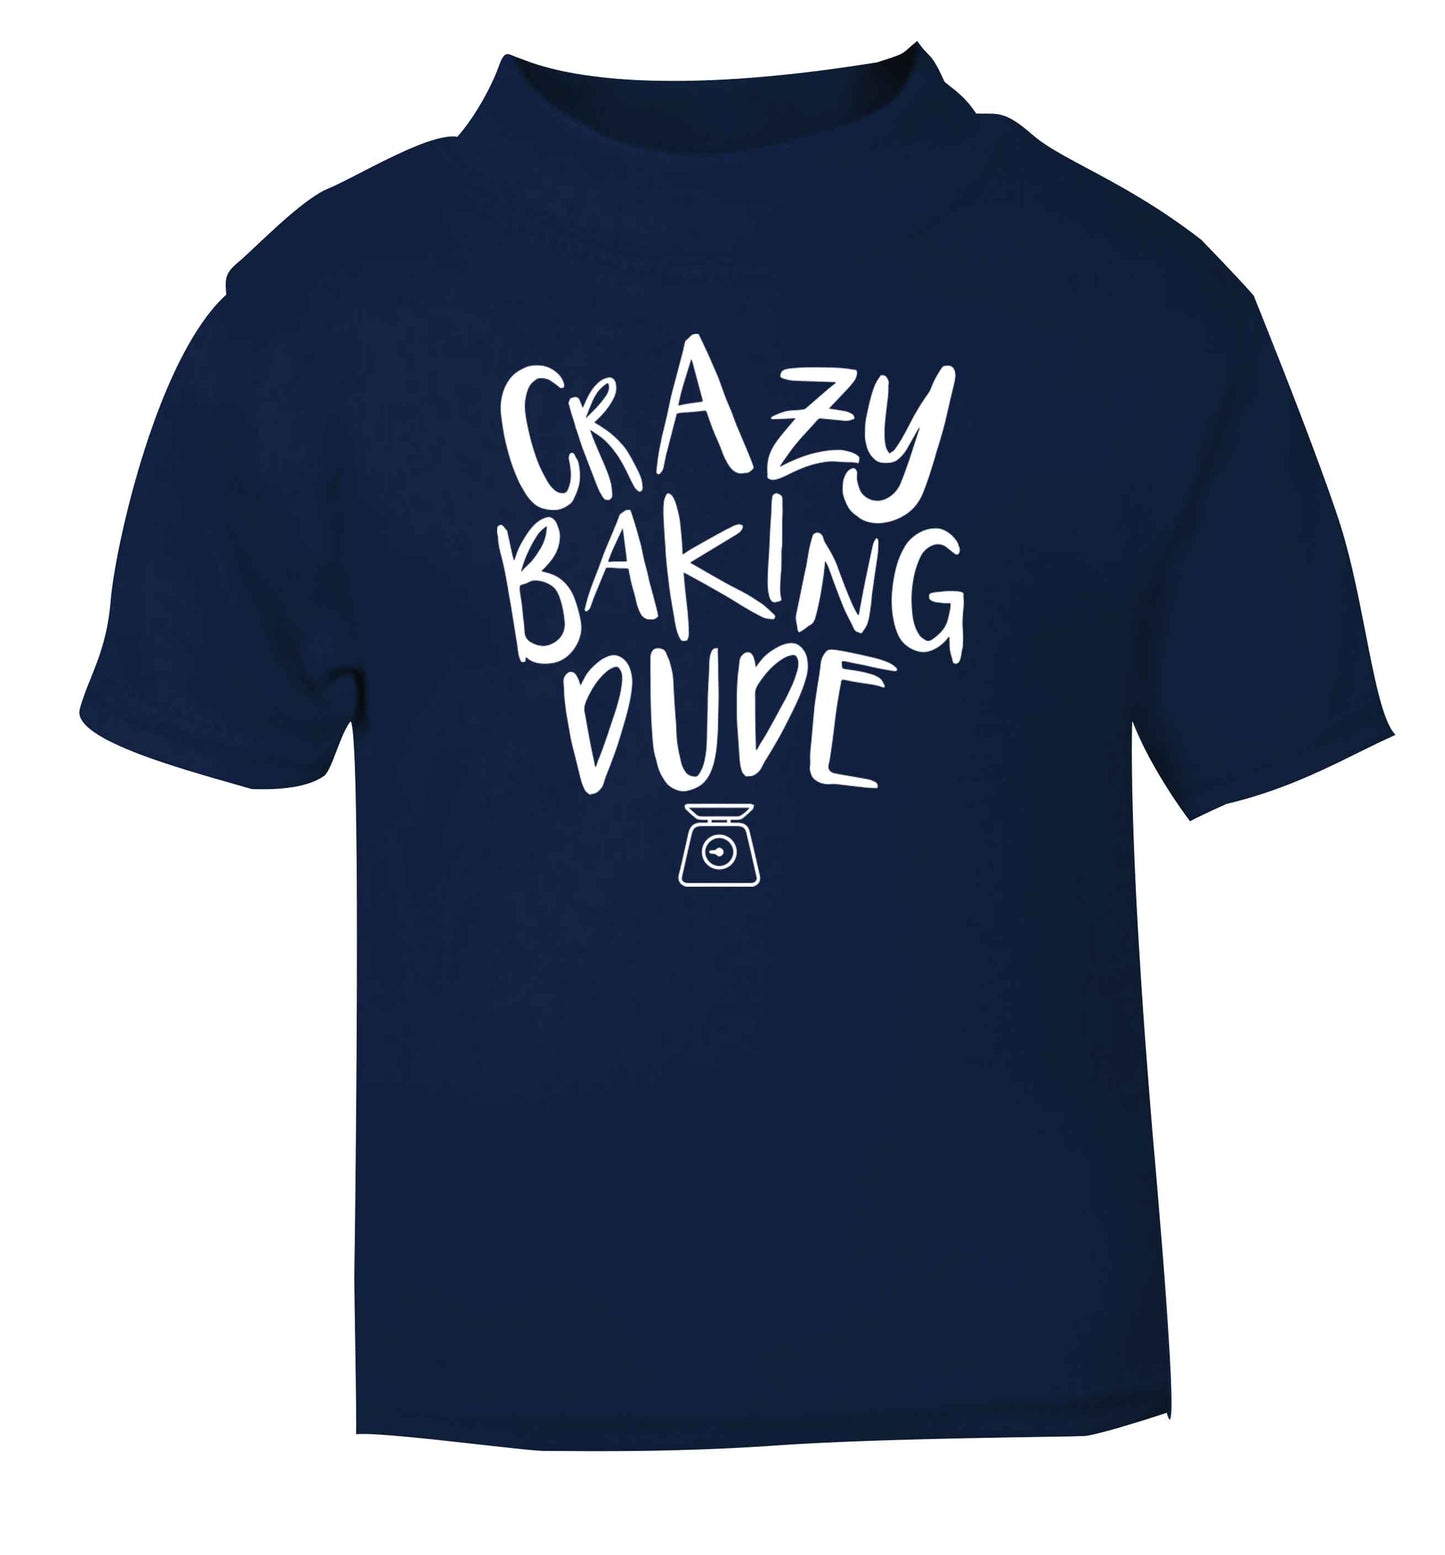 Crazy baking dude navy Baby Toddler Tshirt 2 Years